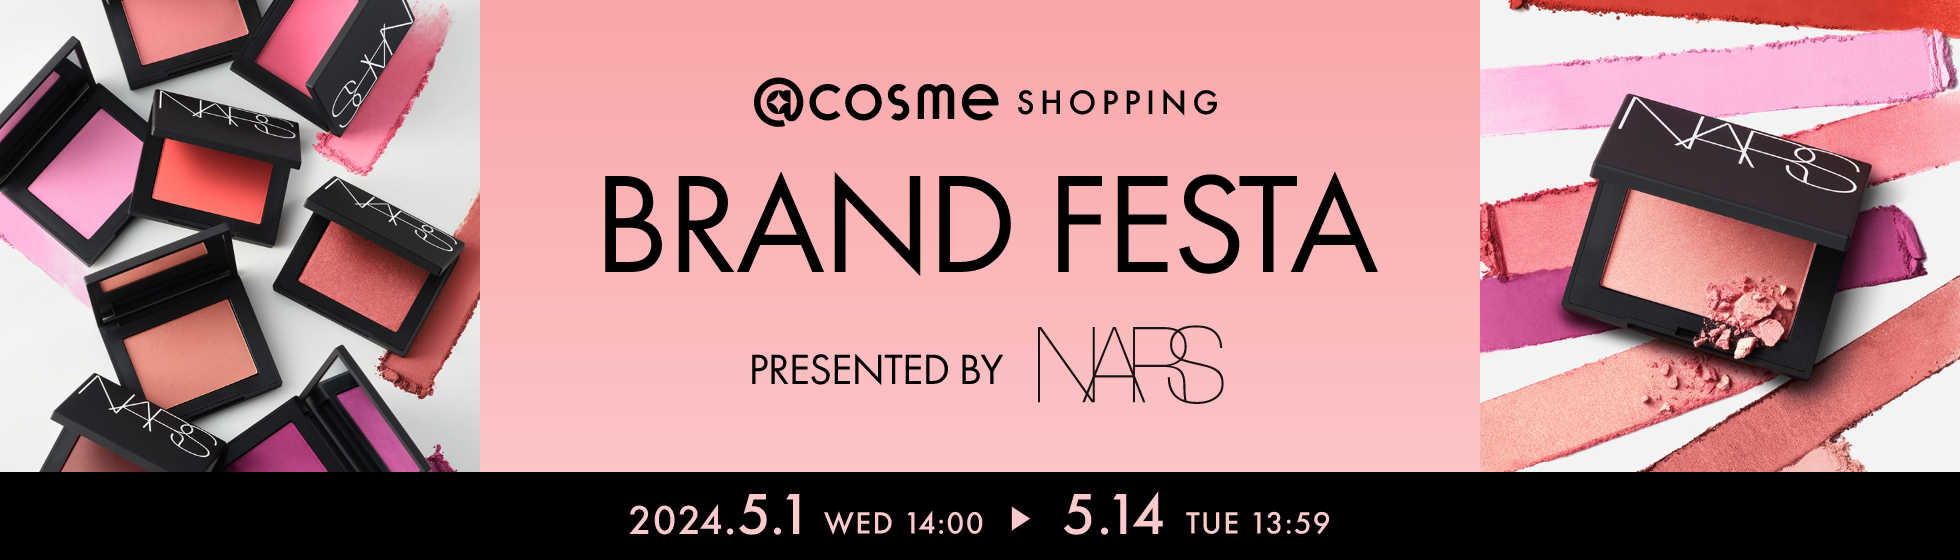 @cosme SHOPPING BRAND FESTA PRESENTED BY NARS 2024.5.1 FRI 14:00 ～ 5.14 FRI 13:59